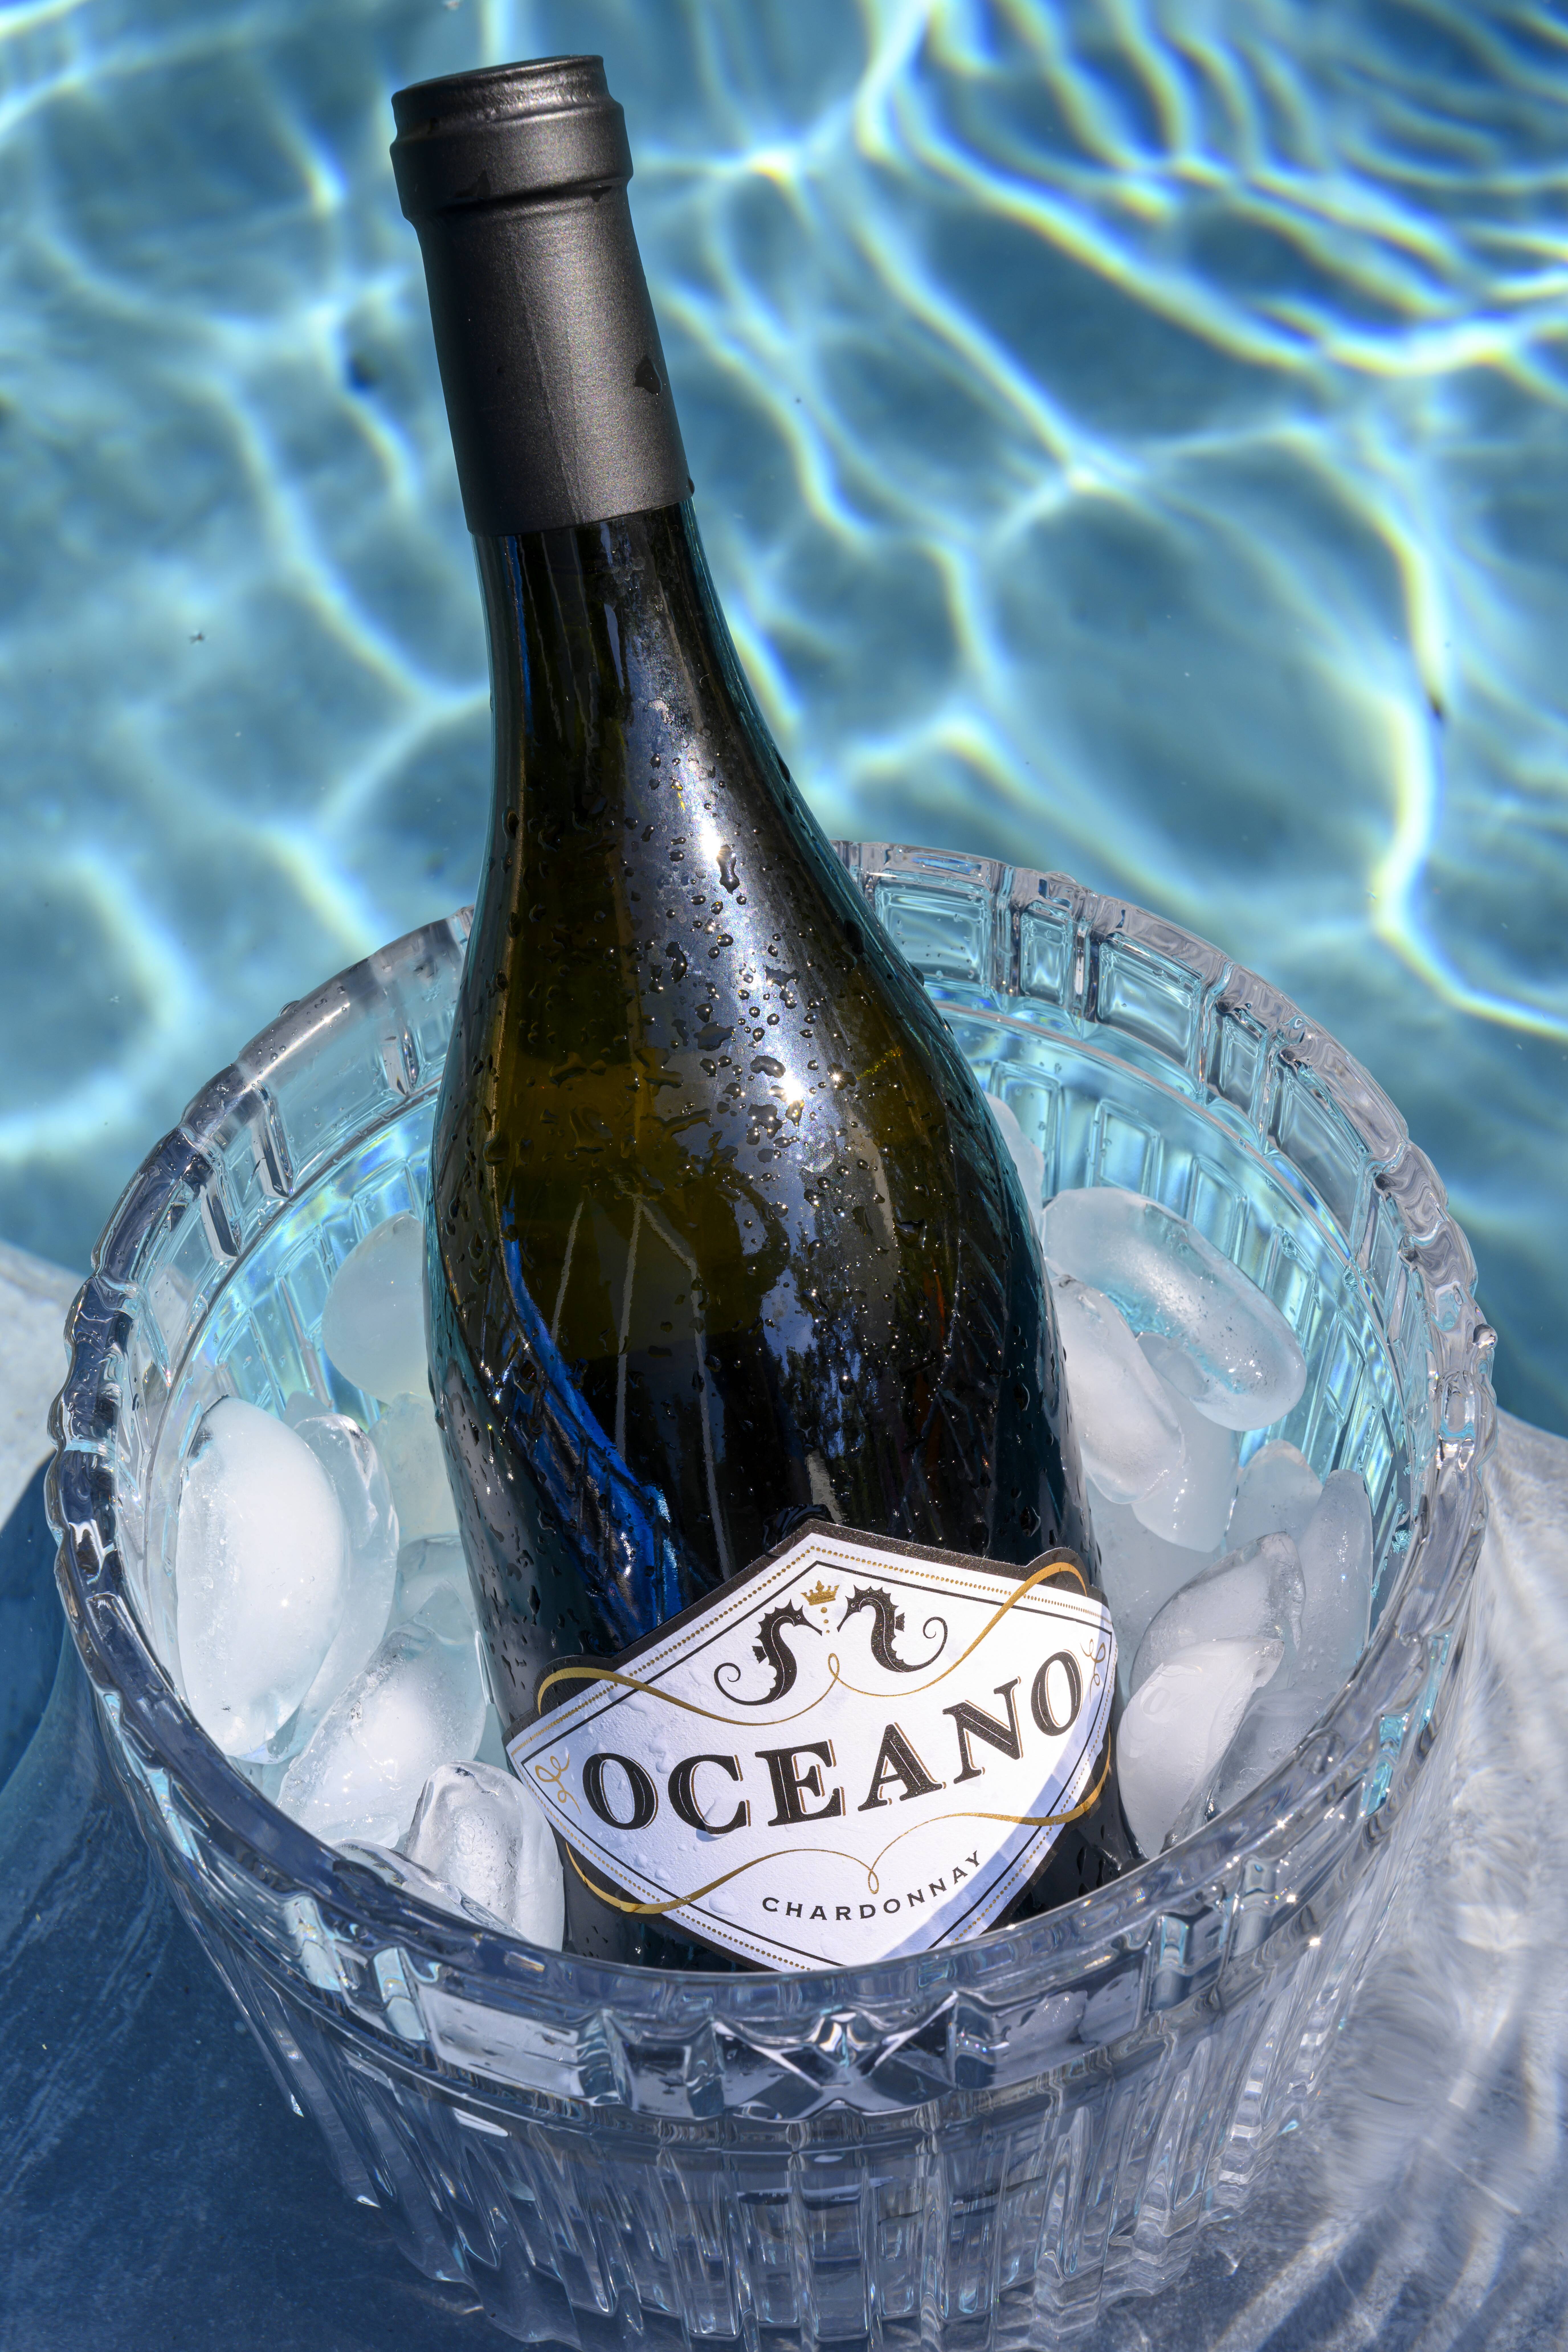 Oceano wine bottle chilling in ice bucket in the pool